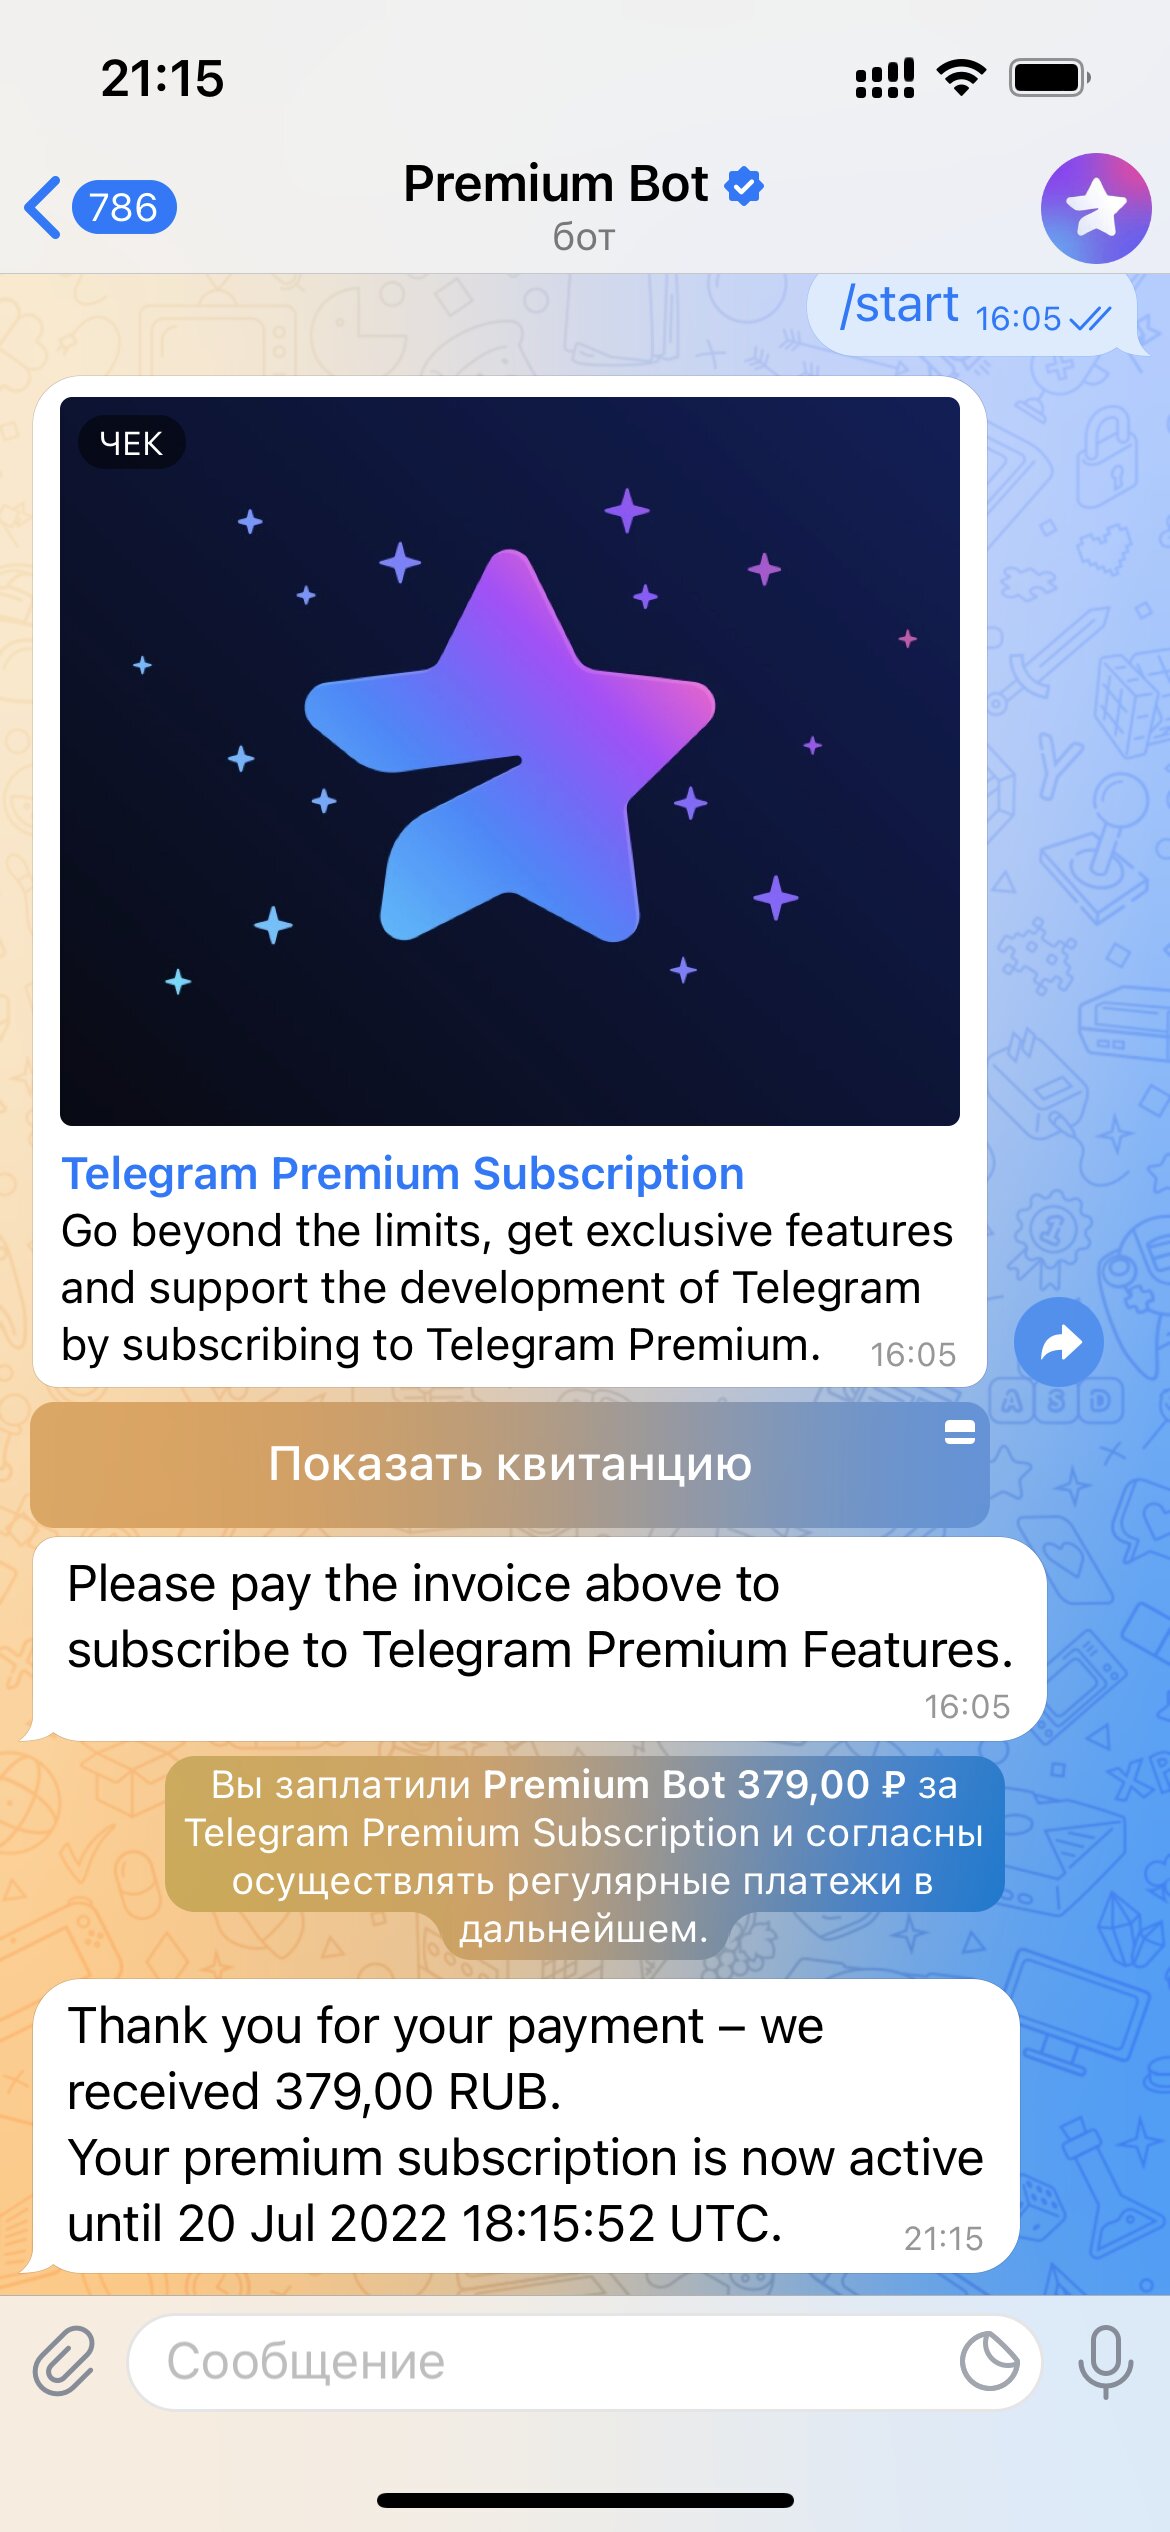 Телеграм премиум за смс. Телеграмм премиум. Звездочка телеграмм премиум. Подписка Telegram Premium. Премиум бот телеграмм.